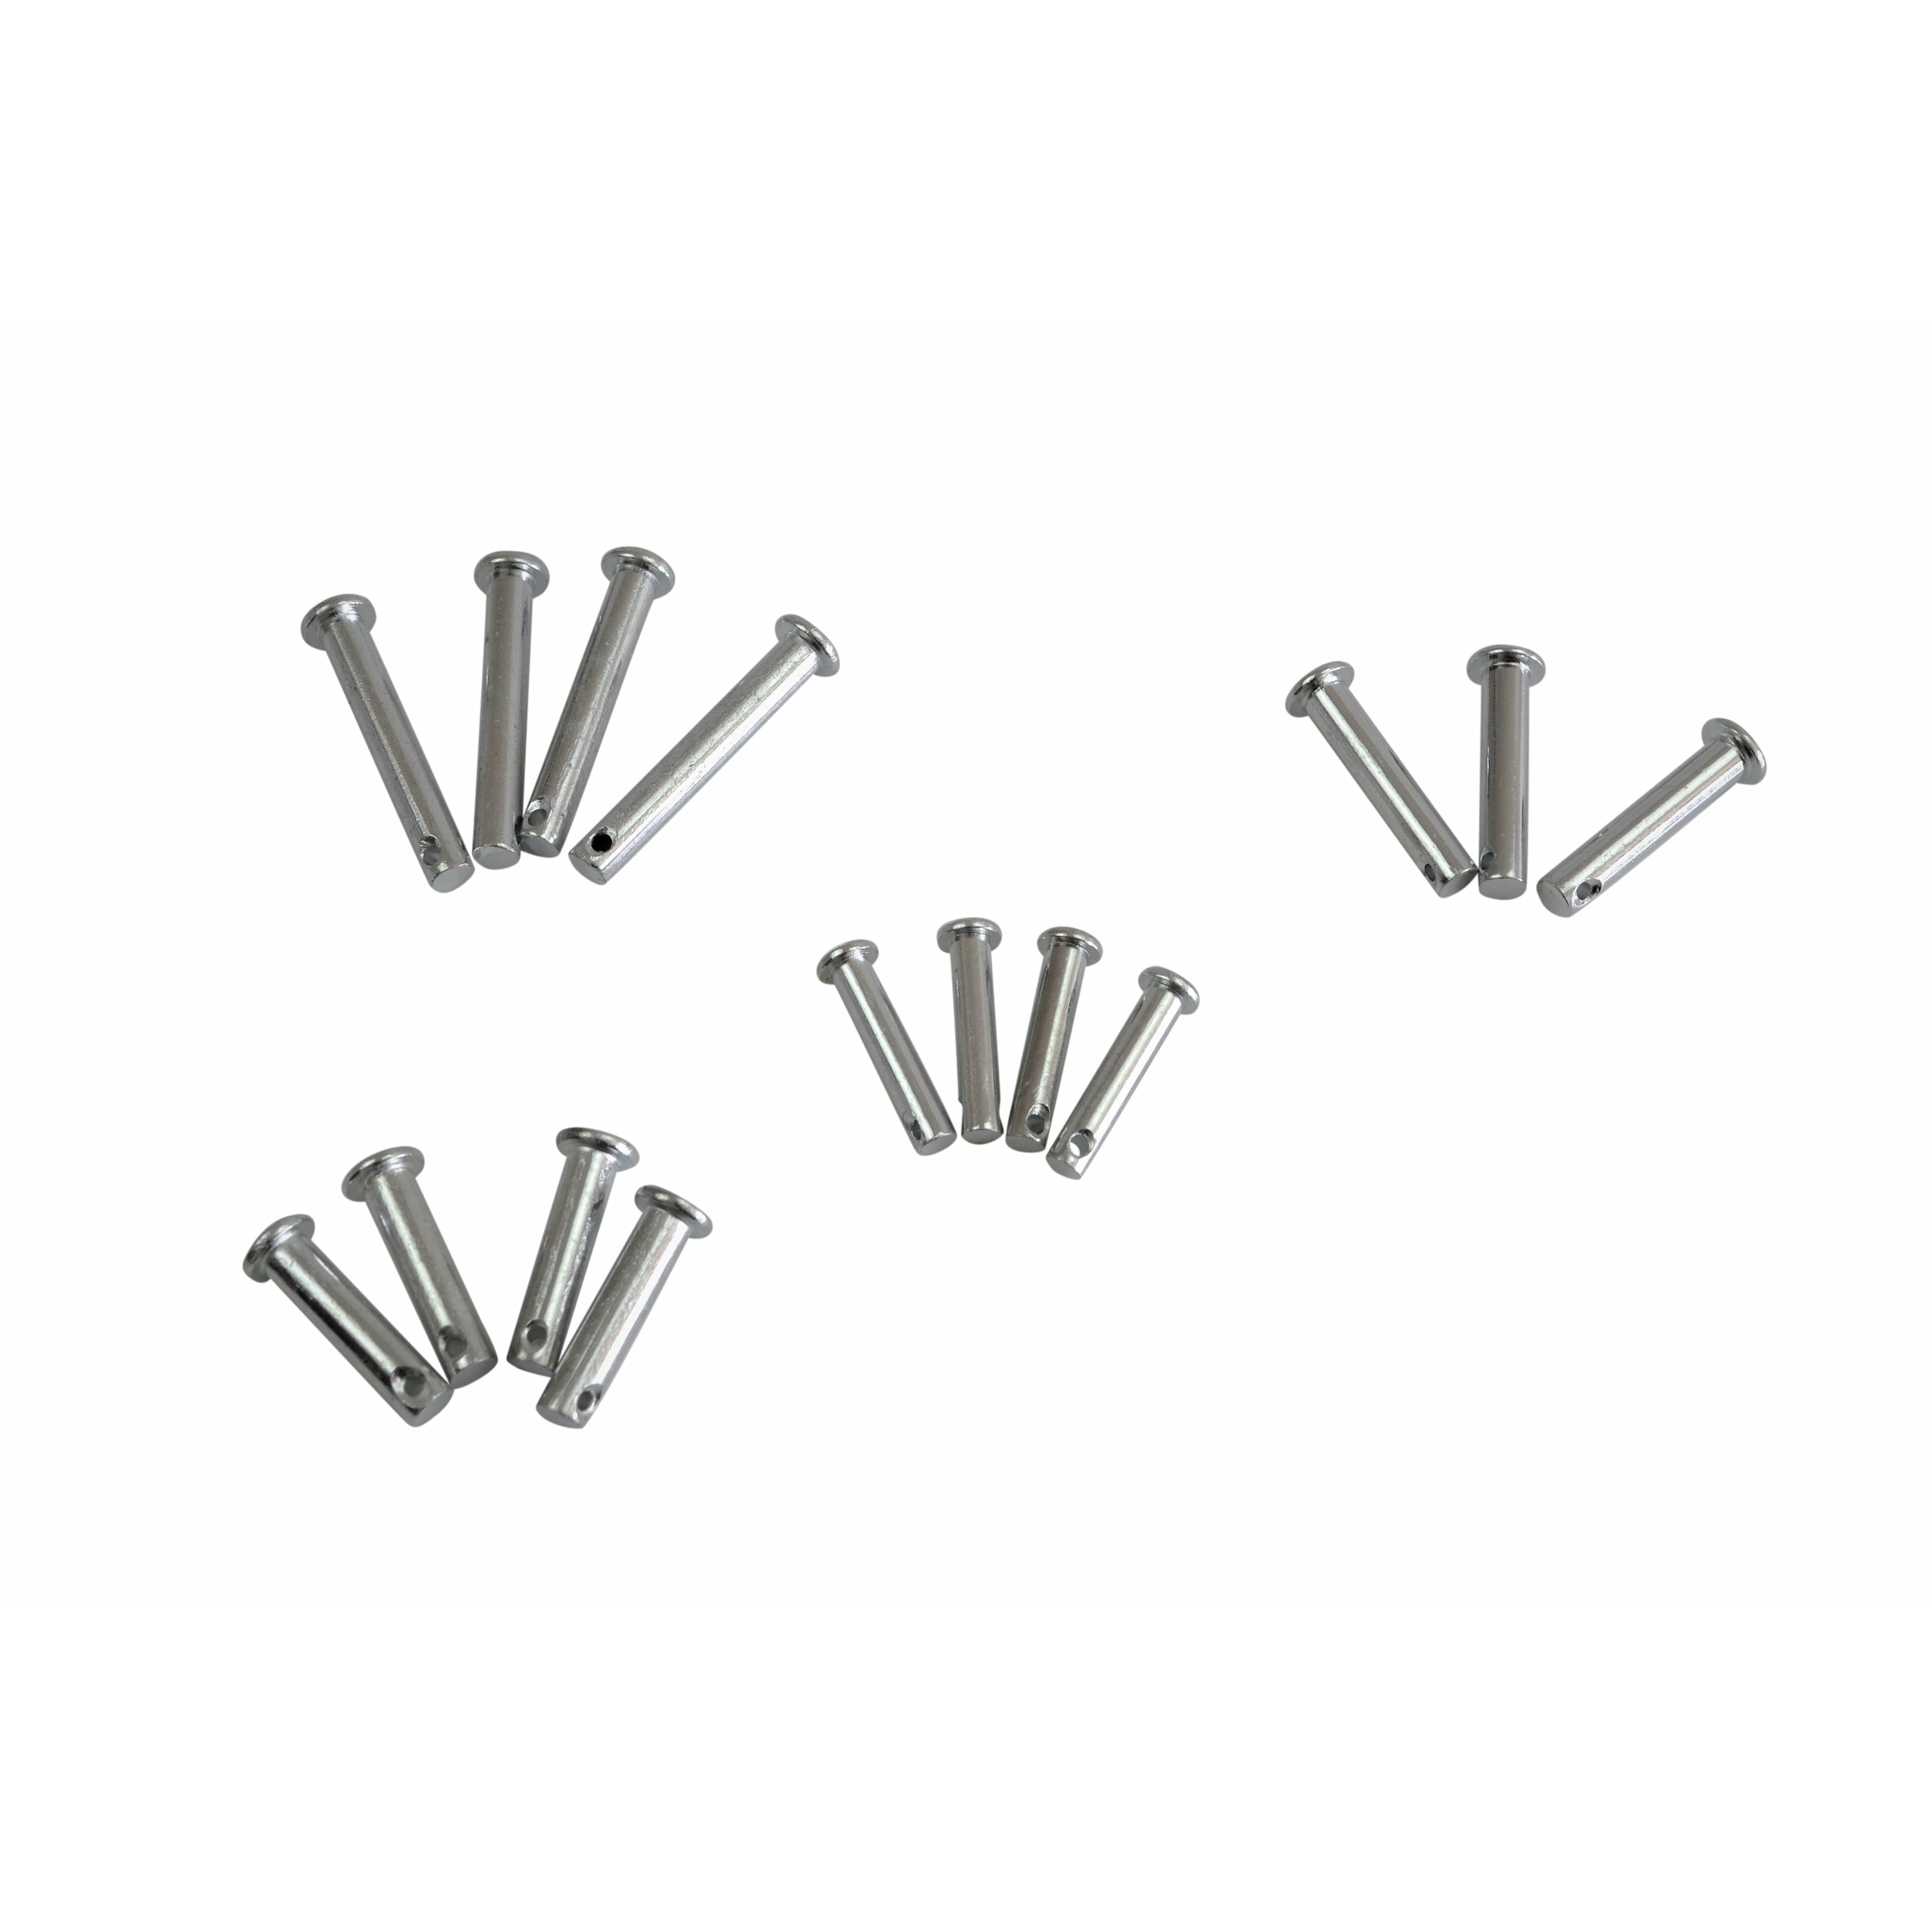  60 Piece Clevis Pin Kit & 150 Piece Metric R Pin Clip Grab Kit Assortment